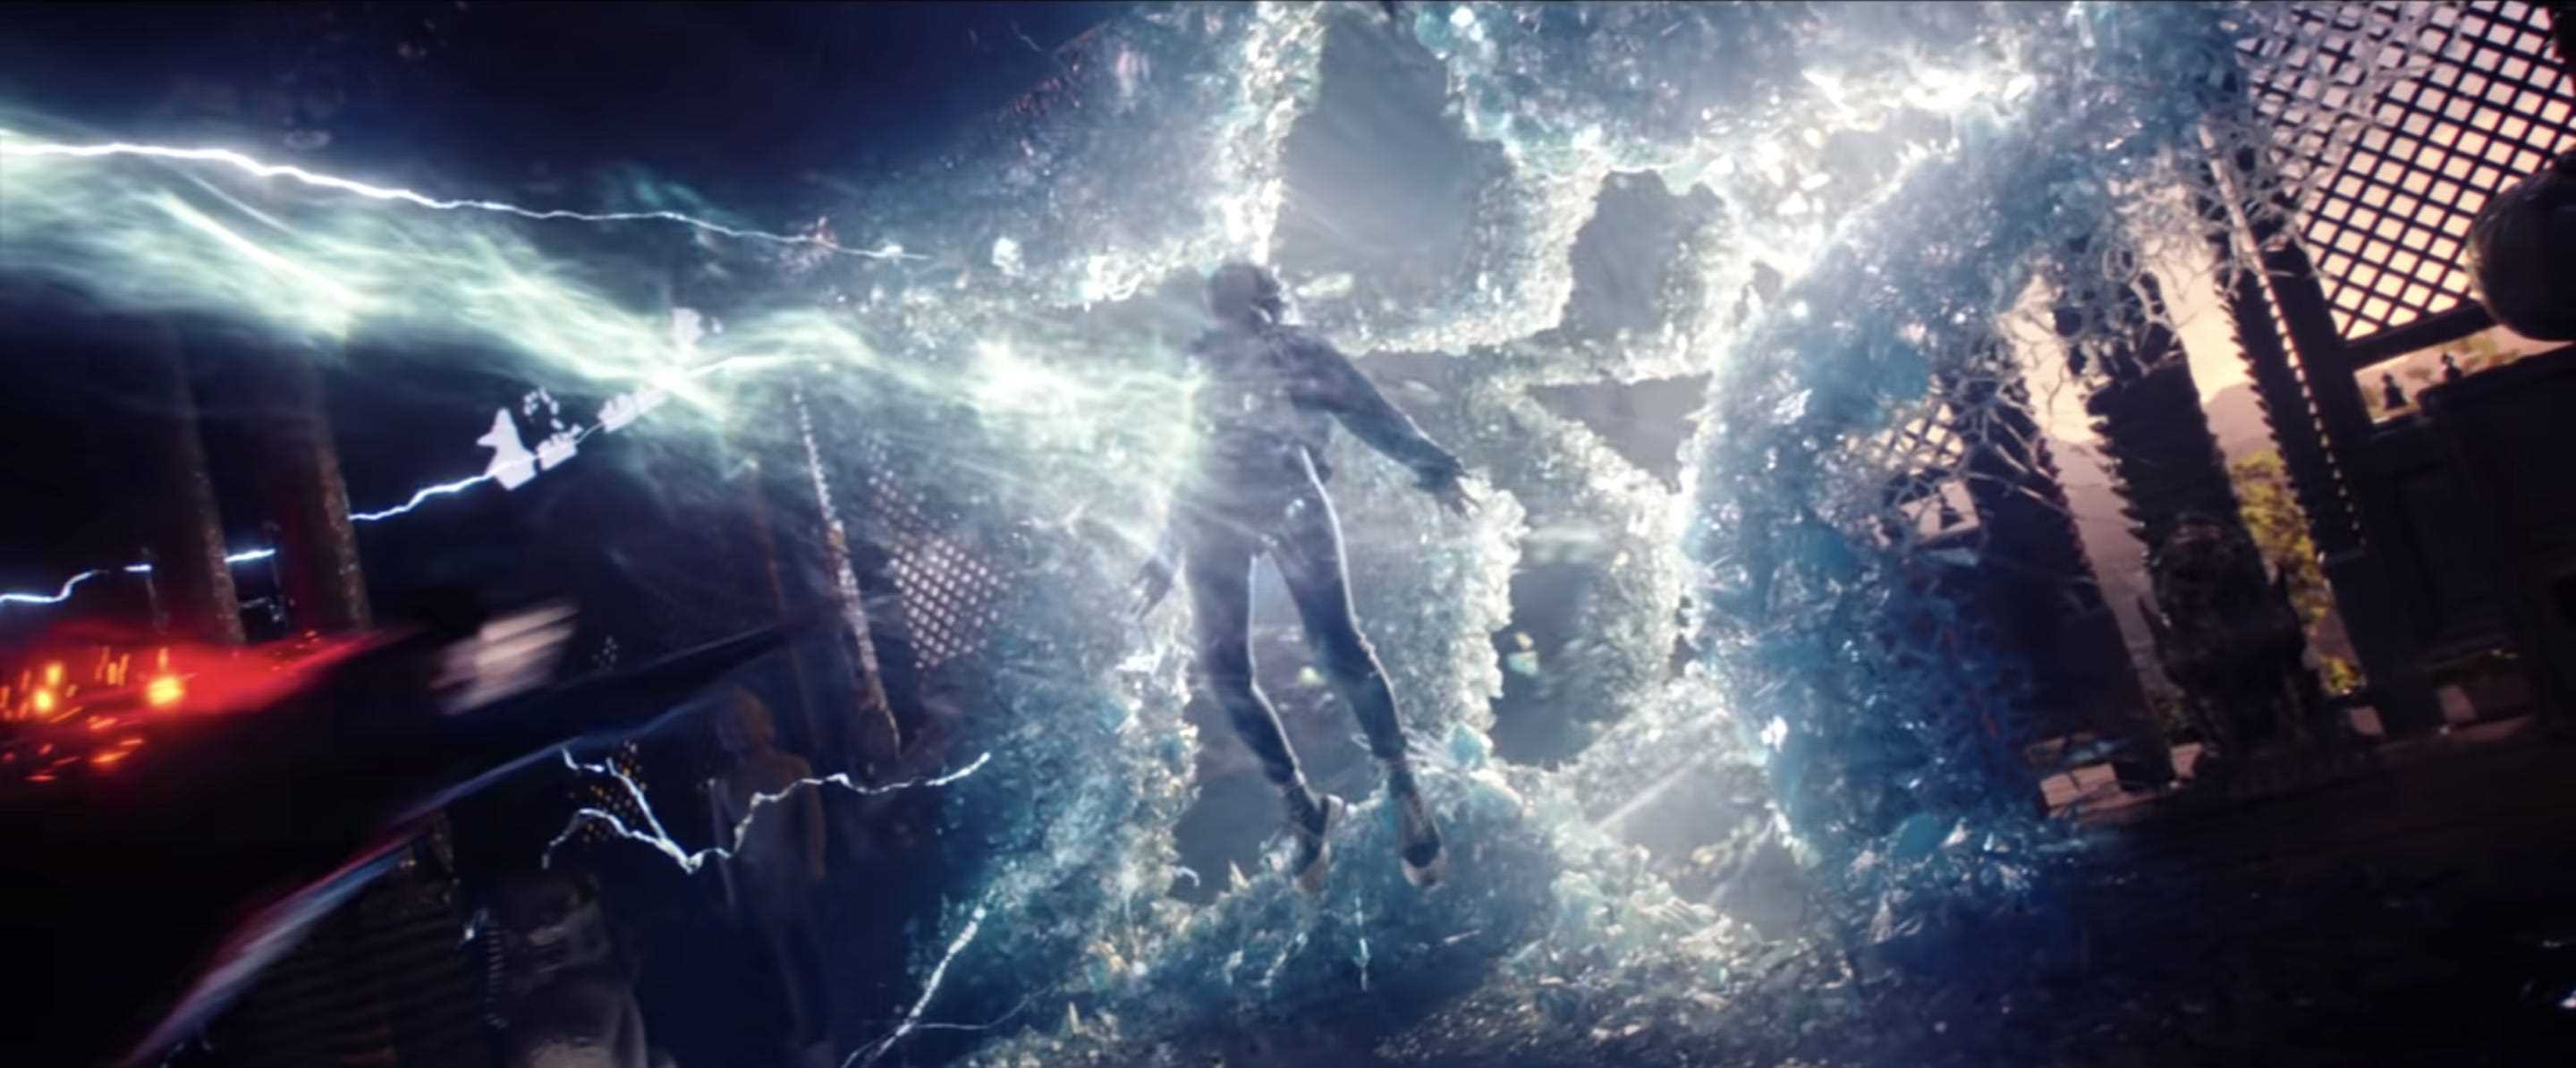 America Chavez öffnet in „Doctor Strange in the Multiverse of Madness“ ein sternförmiges Portal.